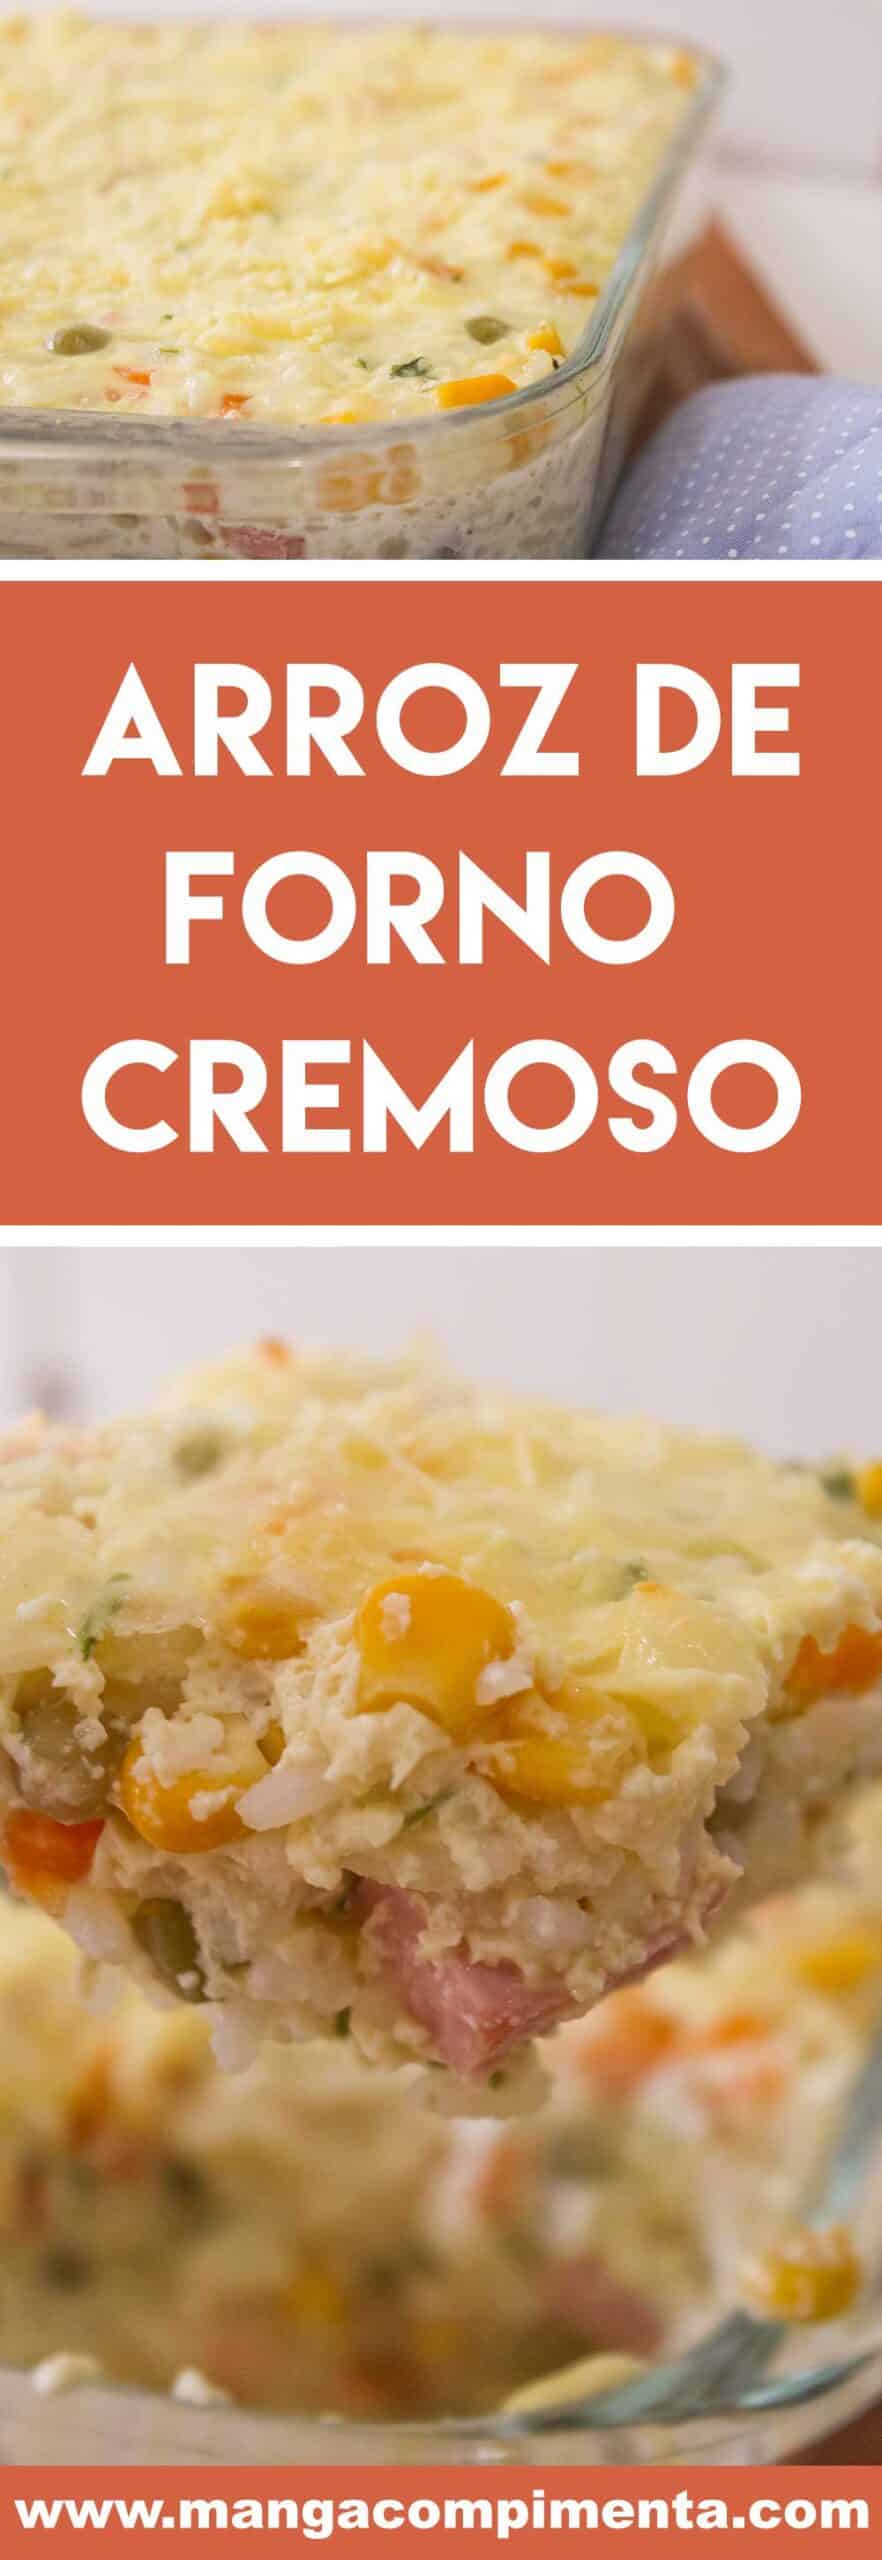 Receita de Arroz de Forno Cremoso  - prepare esse prato delicioso no final de semana! 